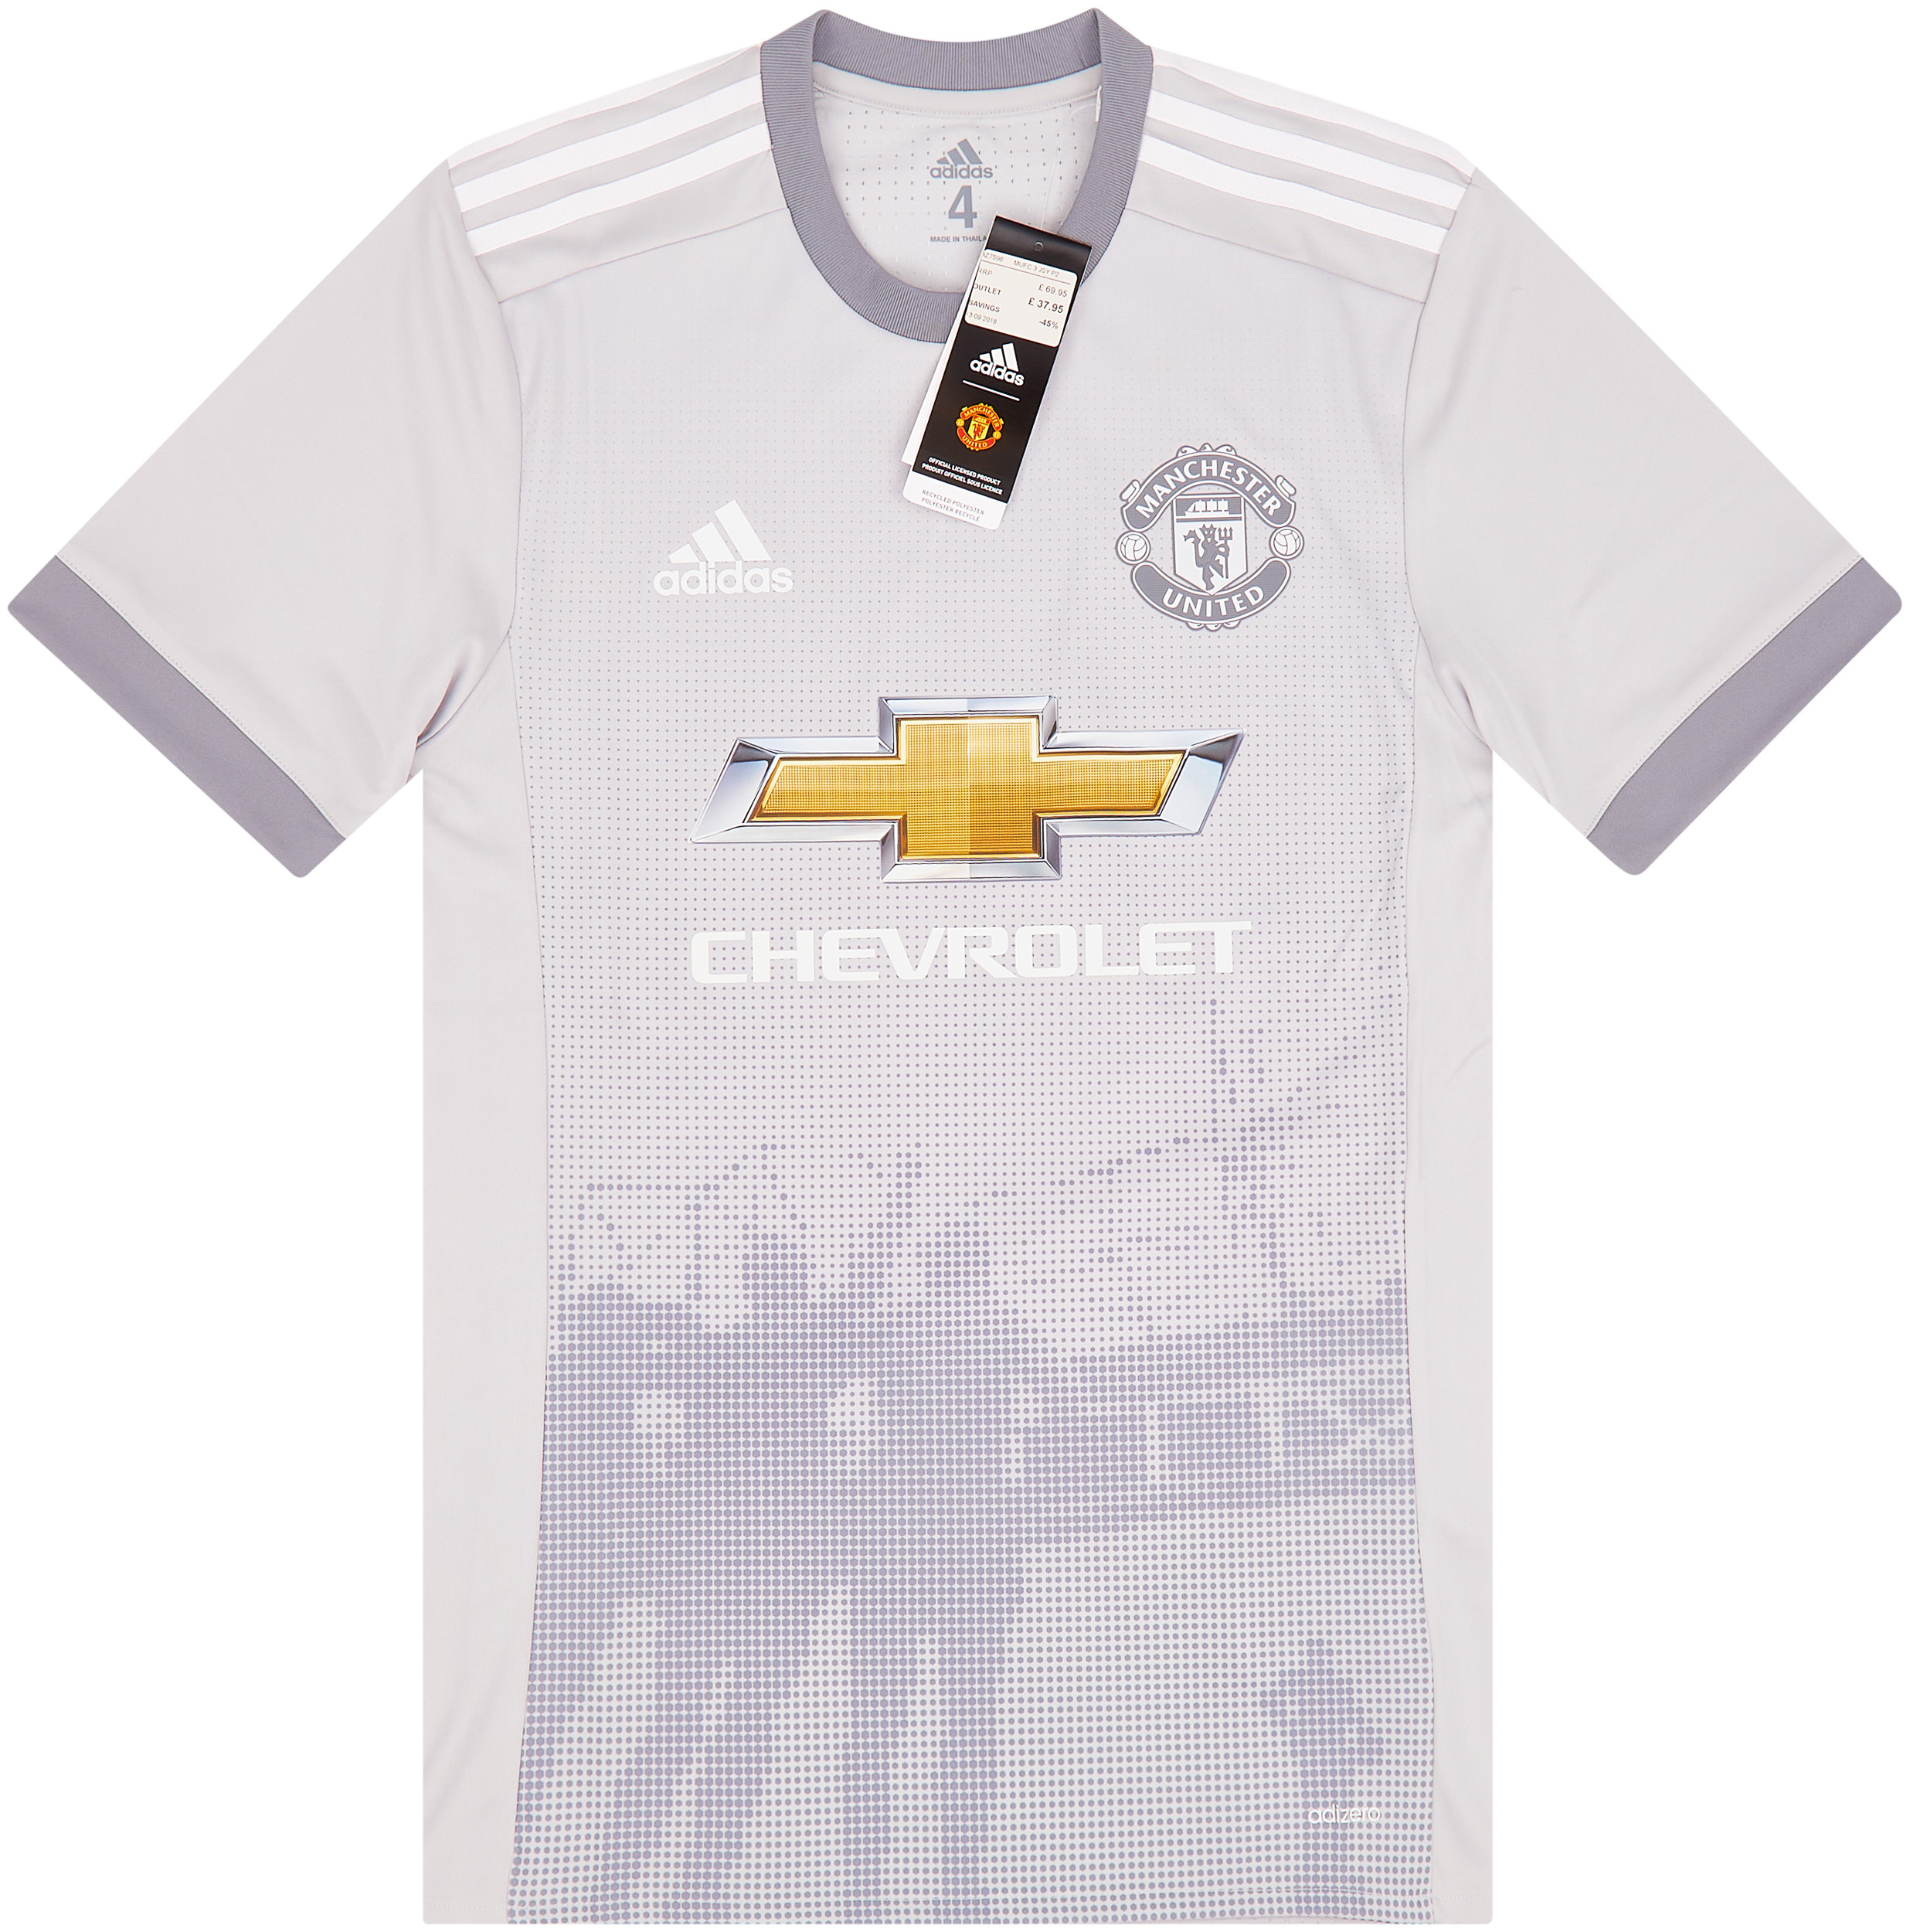 2017-18 Manchester United Player Issue Third Shirt ()